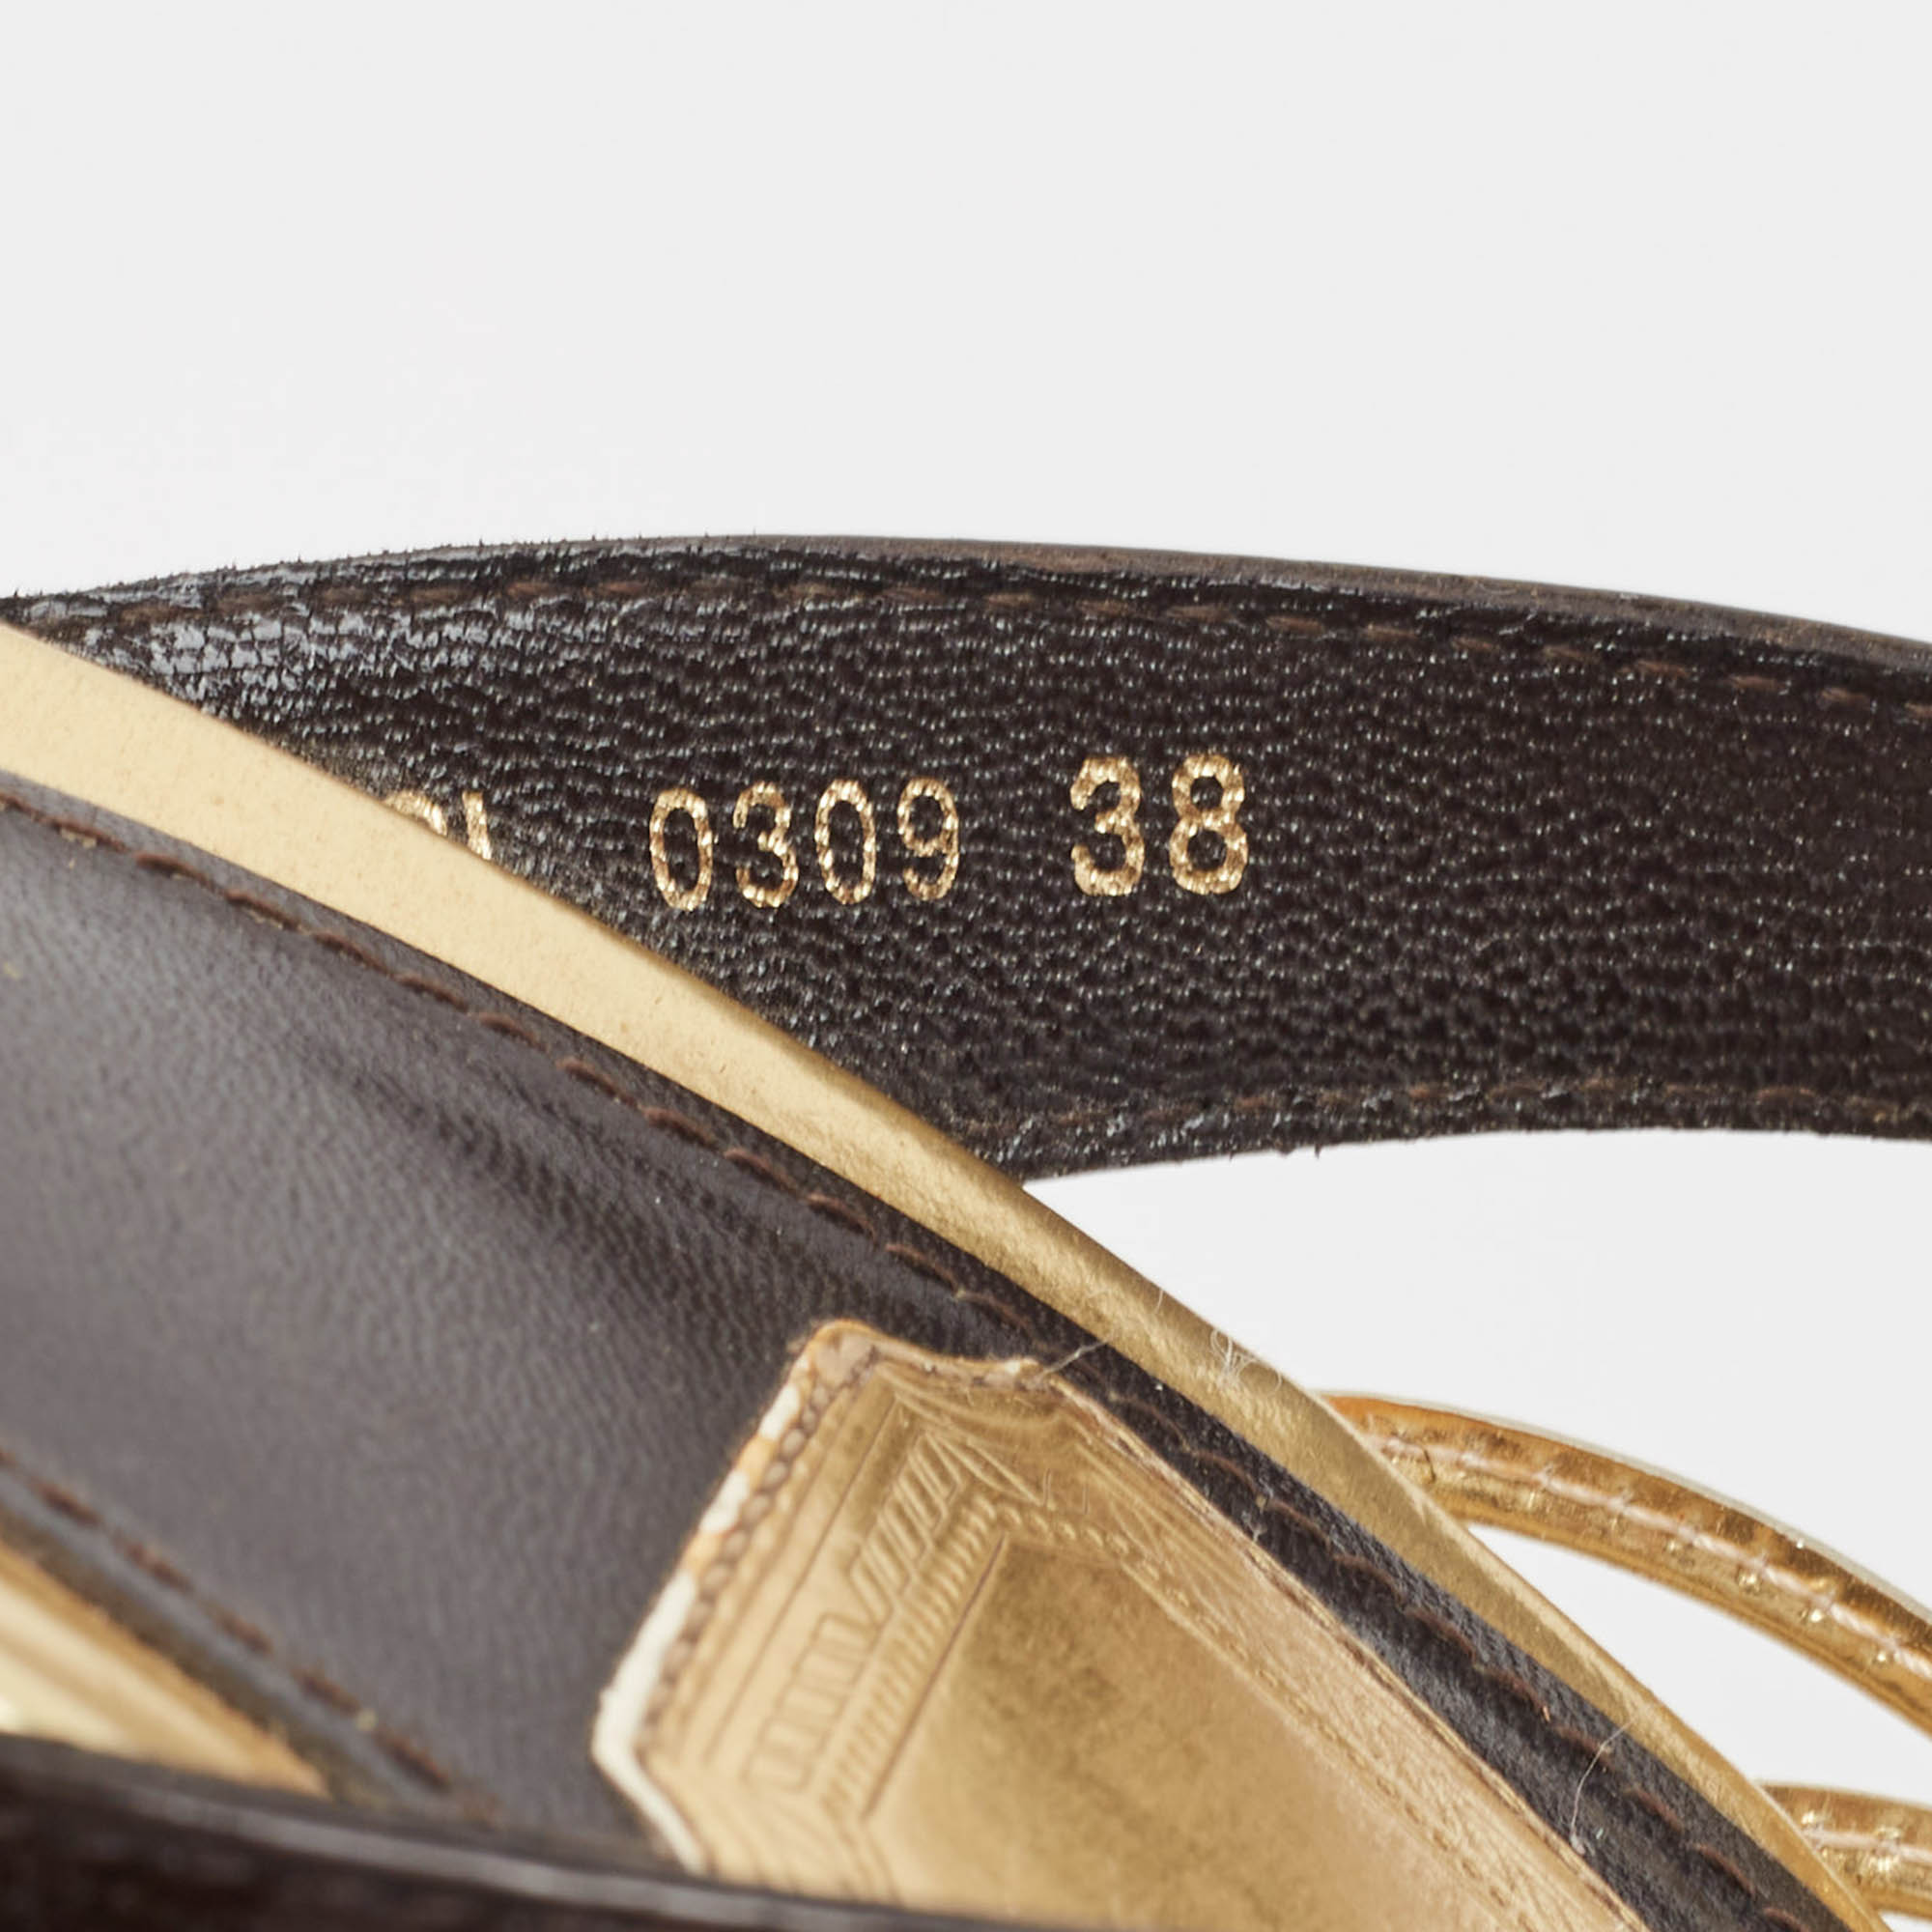 Dior Metallic Leather Strappy Wedge Platform  Ankle Strap Sandals Size 38